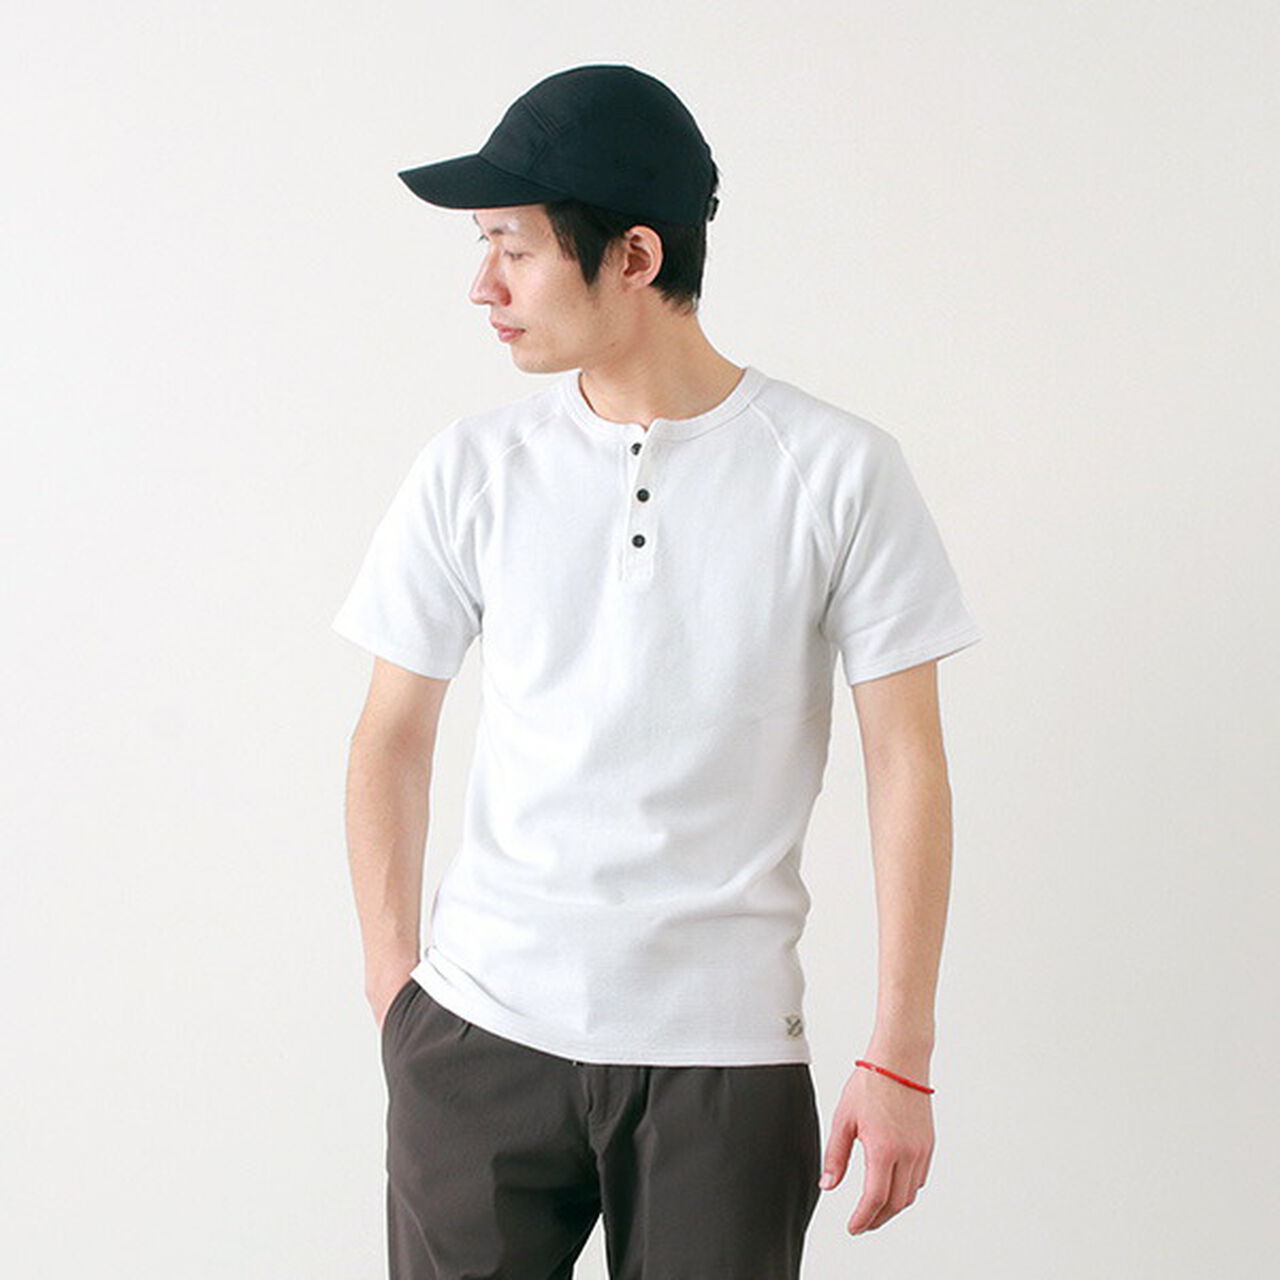 Raffy Spun Milled Henry Neck T-Shirt,White, large image number 0